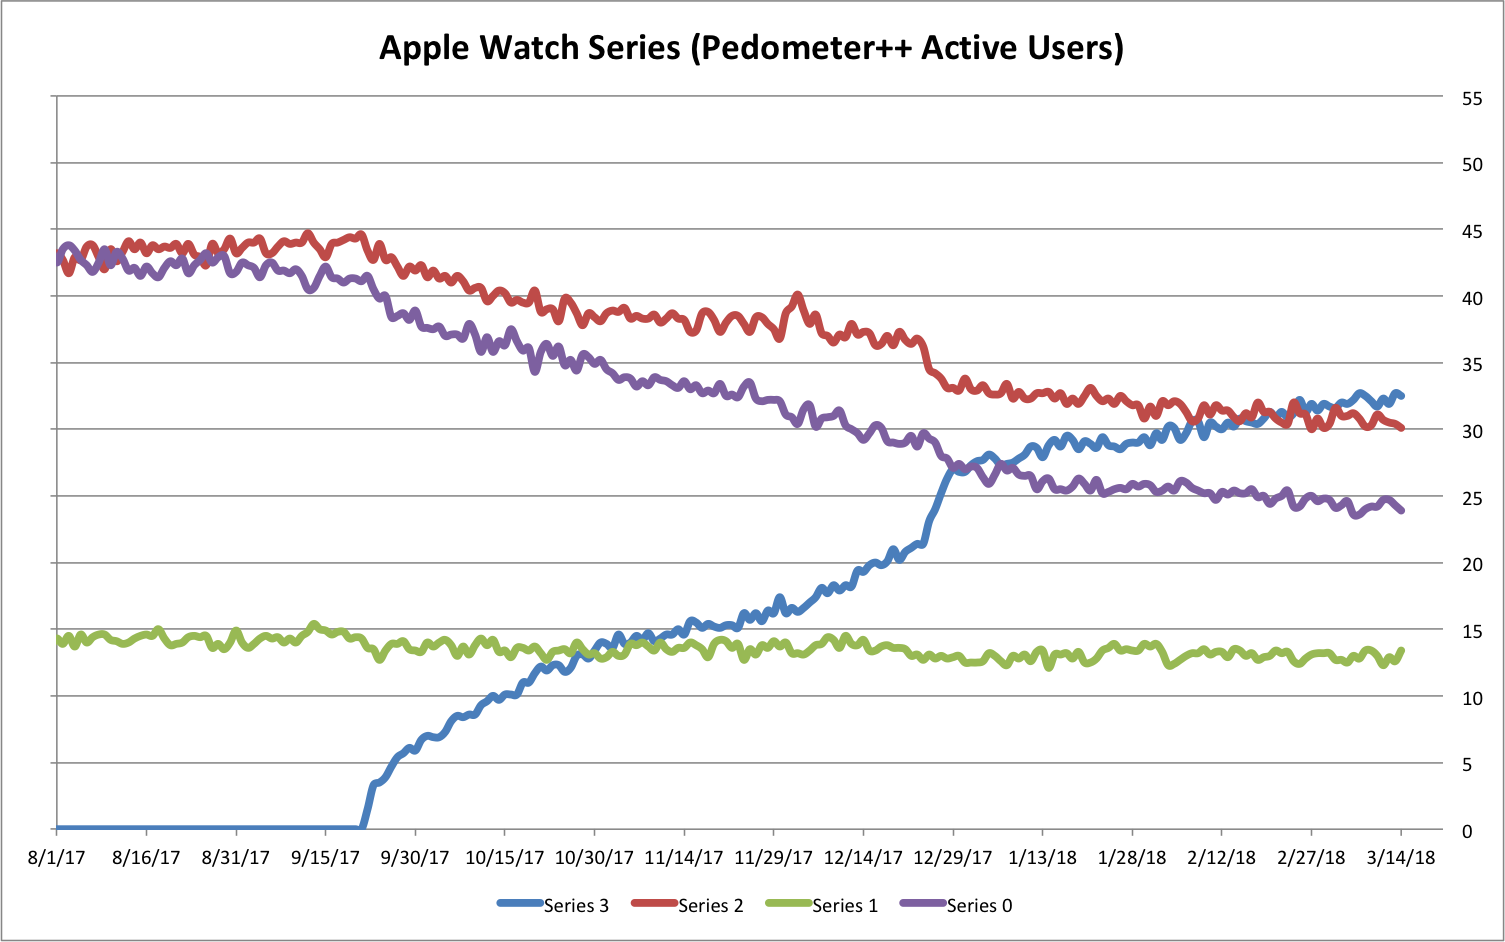 Apple Watch adoption